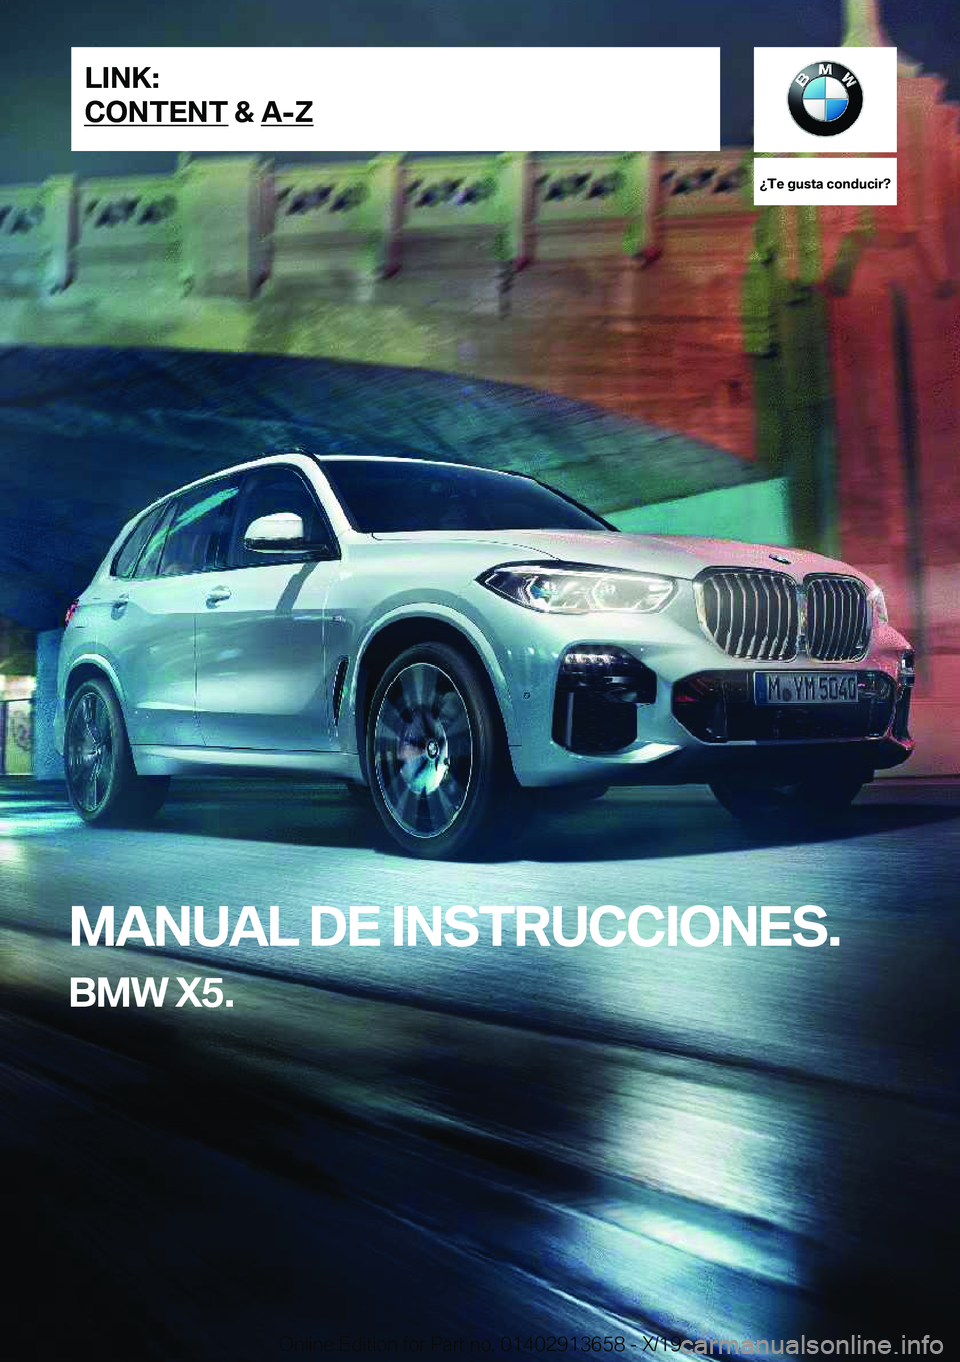 BMW X5 2020  Manuales de Empleo (in Spanish) ��T�e��g�u�s�t�a��c�o�n�d�u�c�i�r� 
�M�A�N�U�A�L��D�E��I�N�S�T�R�U�C�C�I�O�N�E�S�.
�B�M�W��X�5�.�L�I�N�K�:
�C�O�N�T�E�N�T��&��A�-�Z�O�n�l�i�n�e��E�d�i�t�i�o�n��f�o�r��P�a�r�t��n�o�.��0�1�